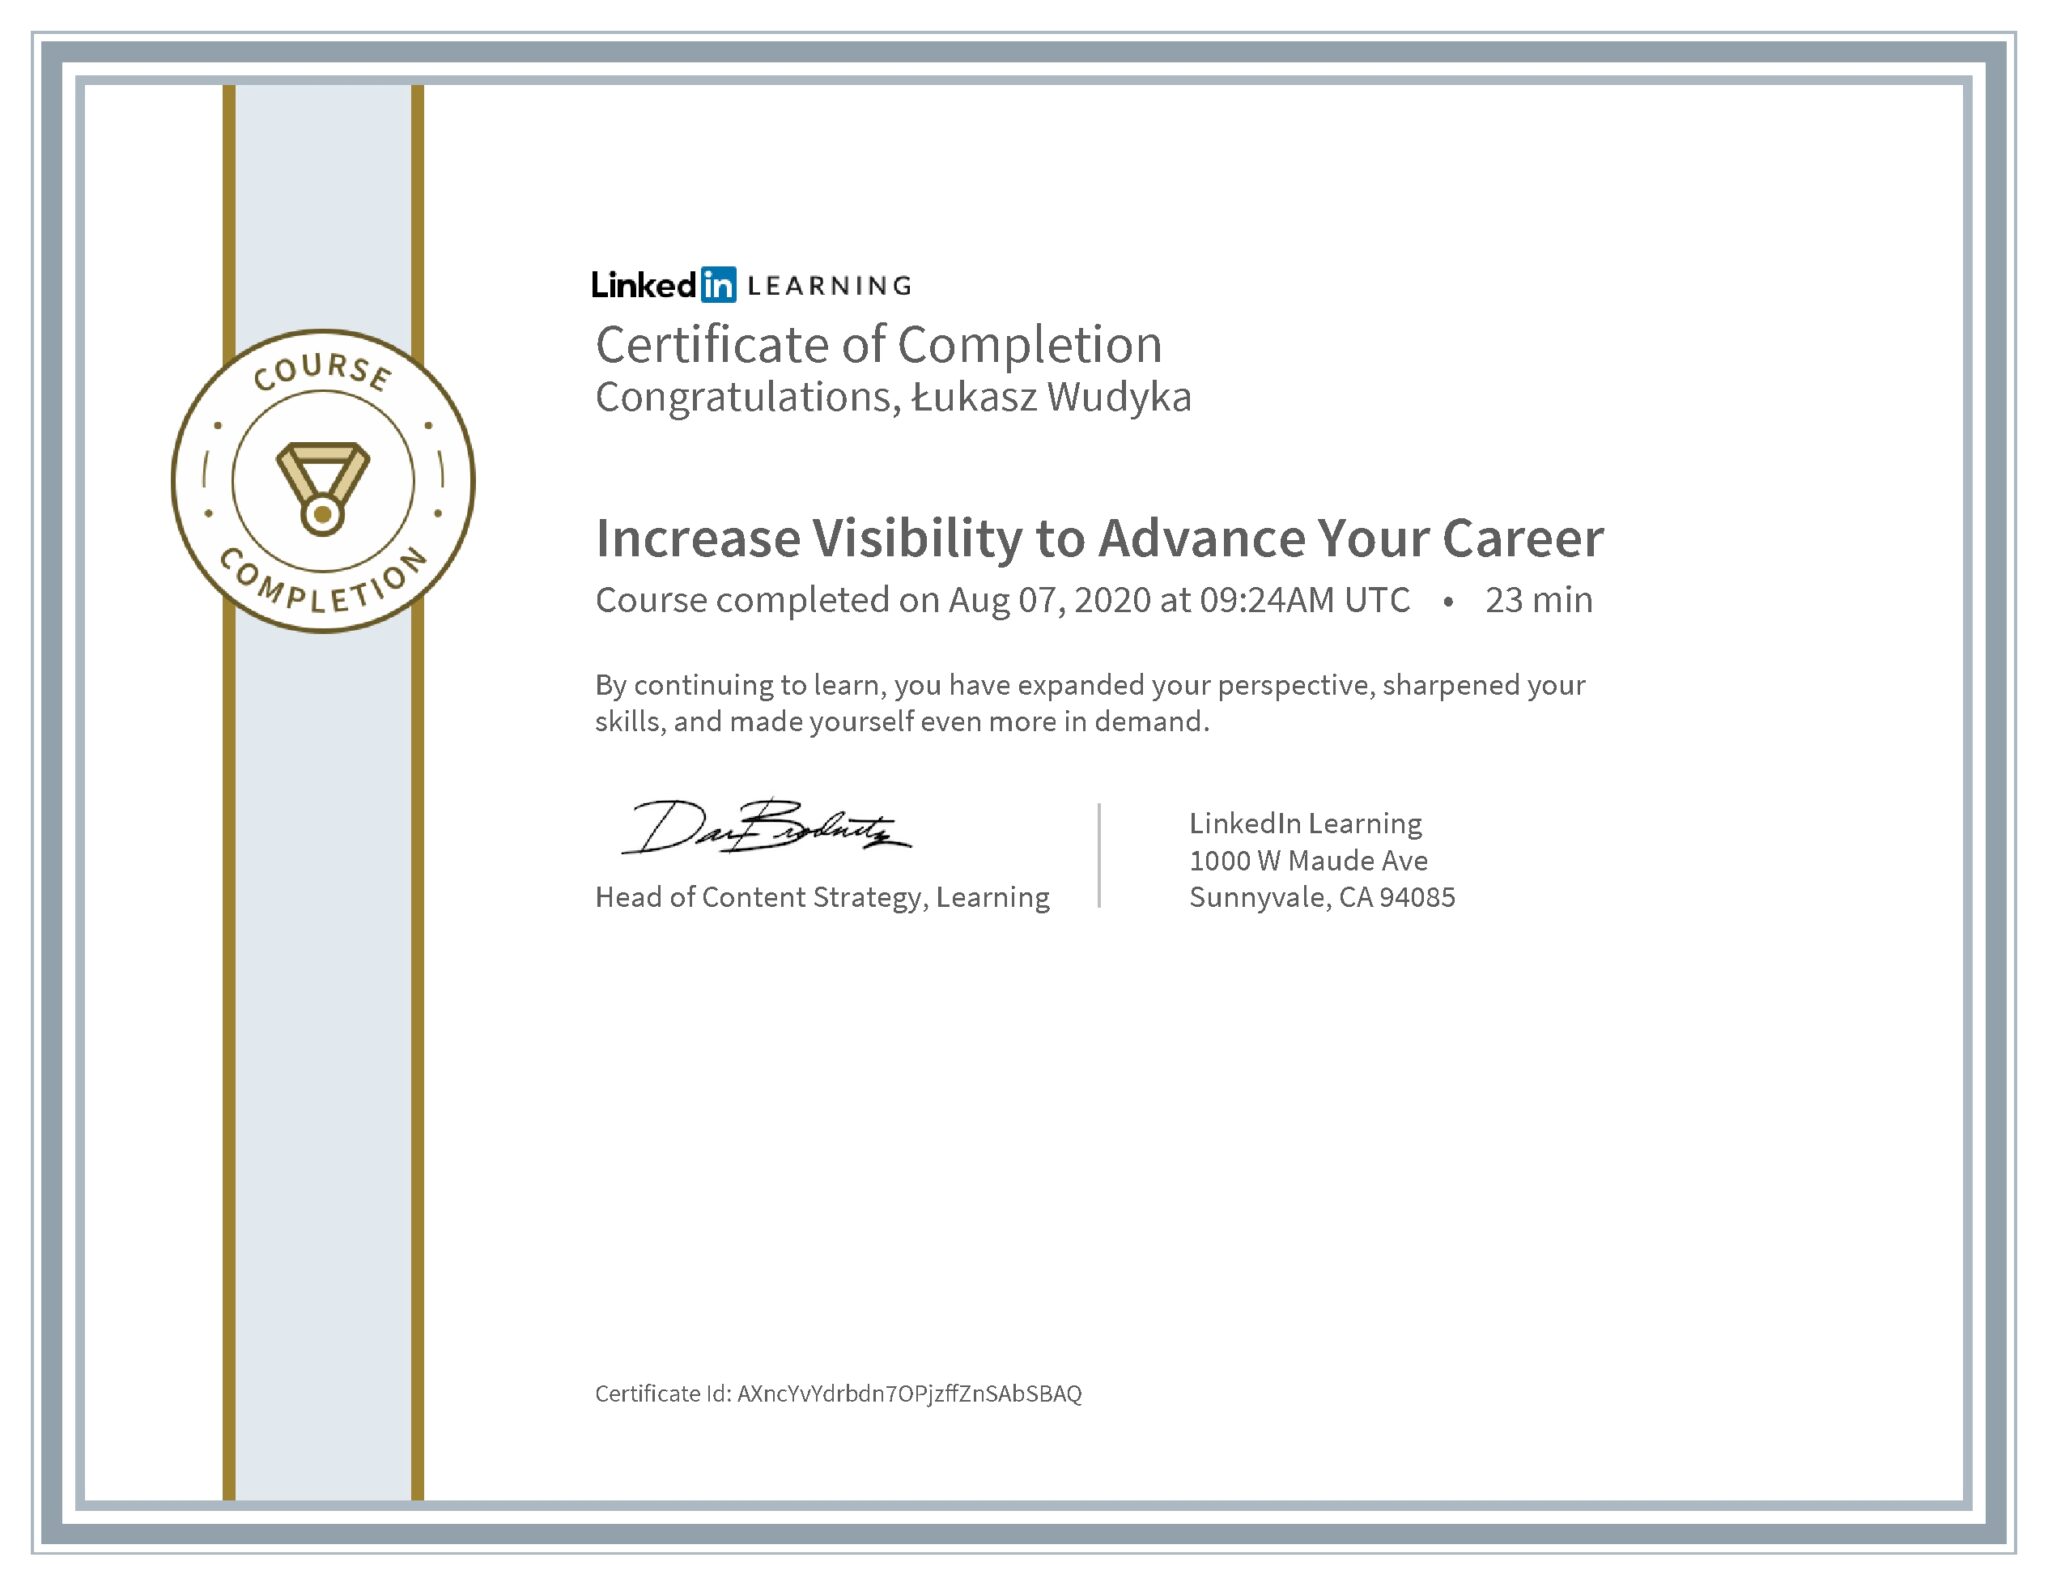 Łukasz Wudyka certyfikat LinkedIn Increase Visibility to Advance Your Career